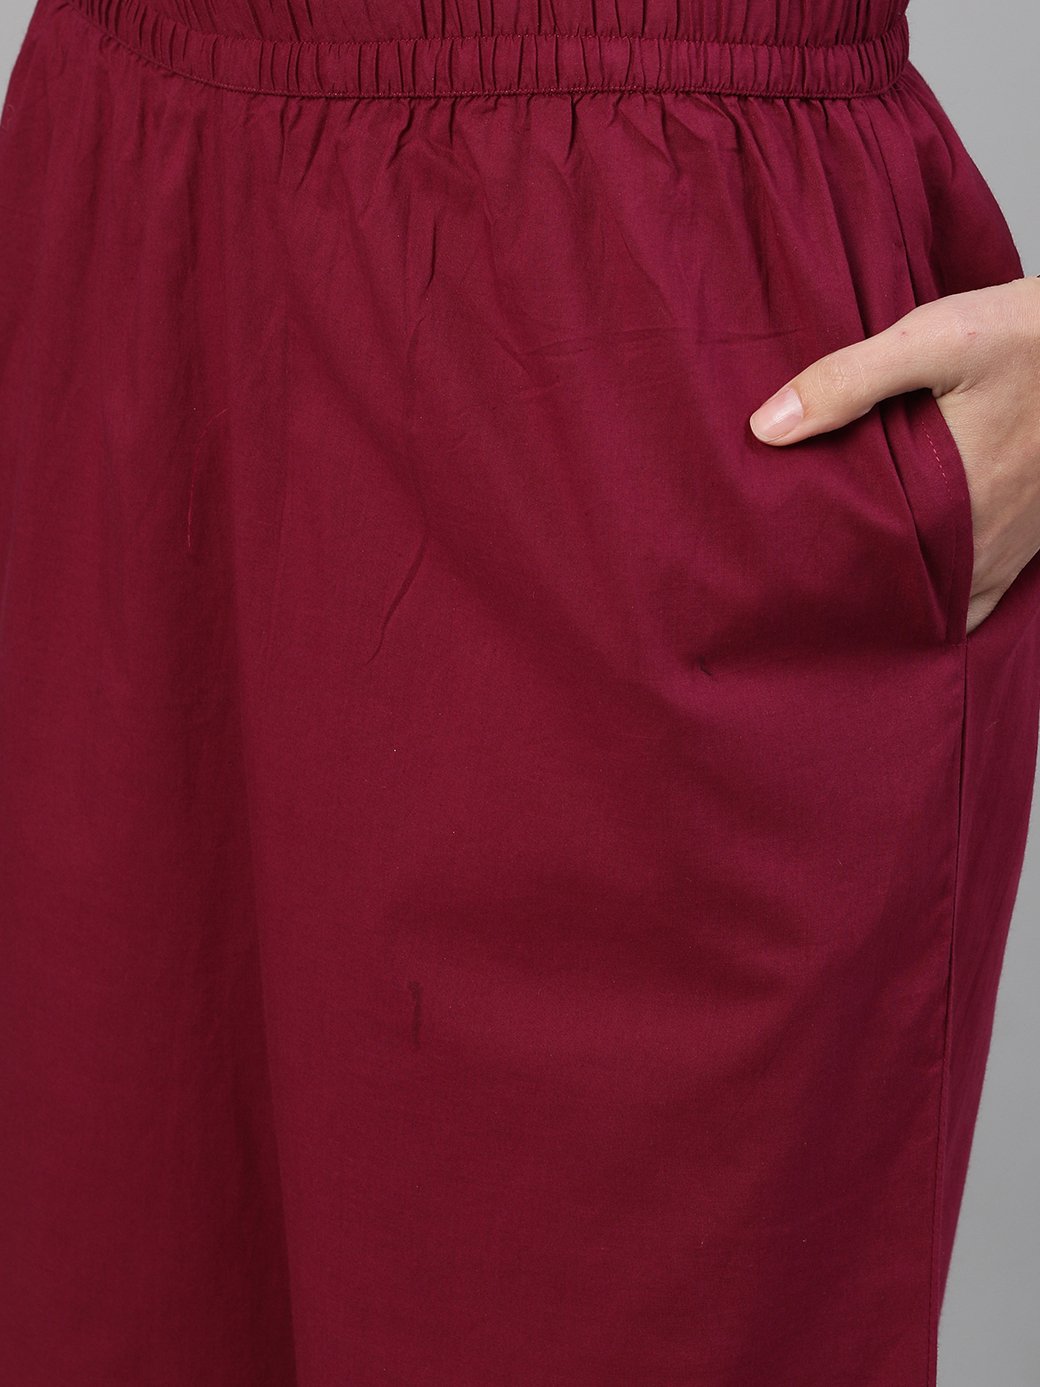 Women's Wine Three-Quarter Sleeves Block Printed Straight Kurta With Palazzo And Pockets - Nayo Clothing